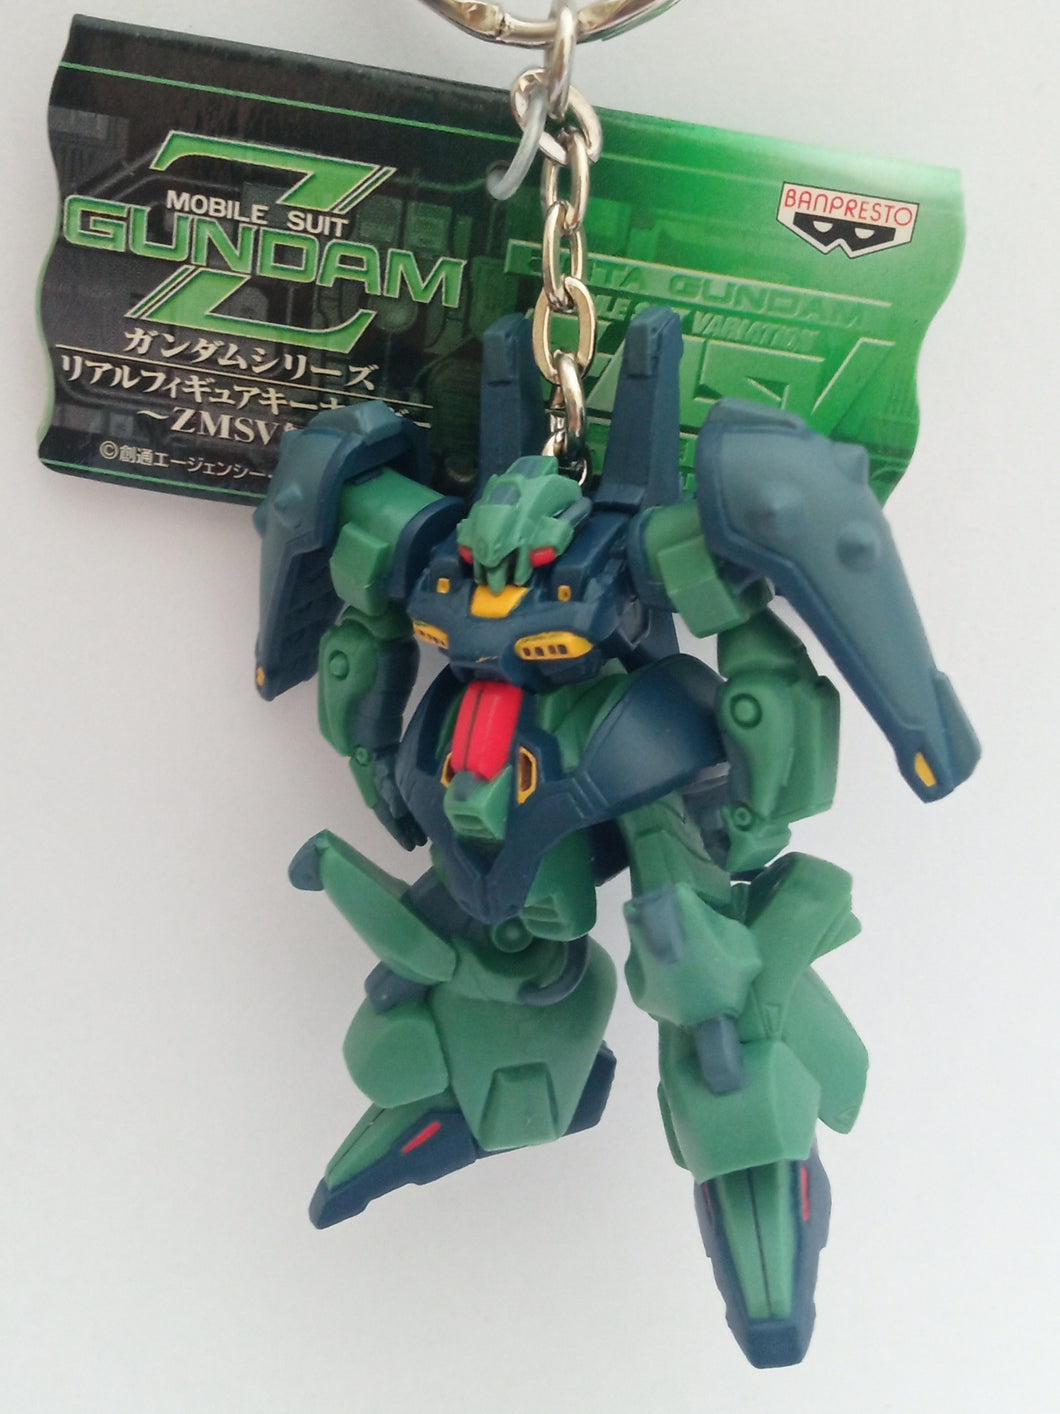 Mobile Suit Gundam Z Variation Figure Keychain Mascot Key Holder Strap